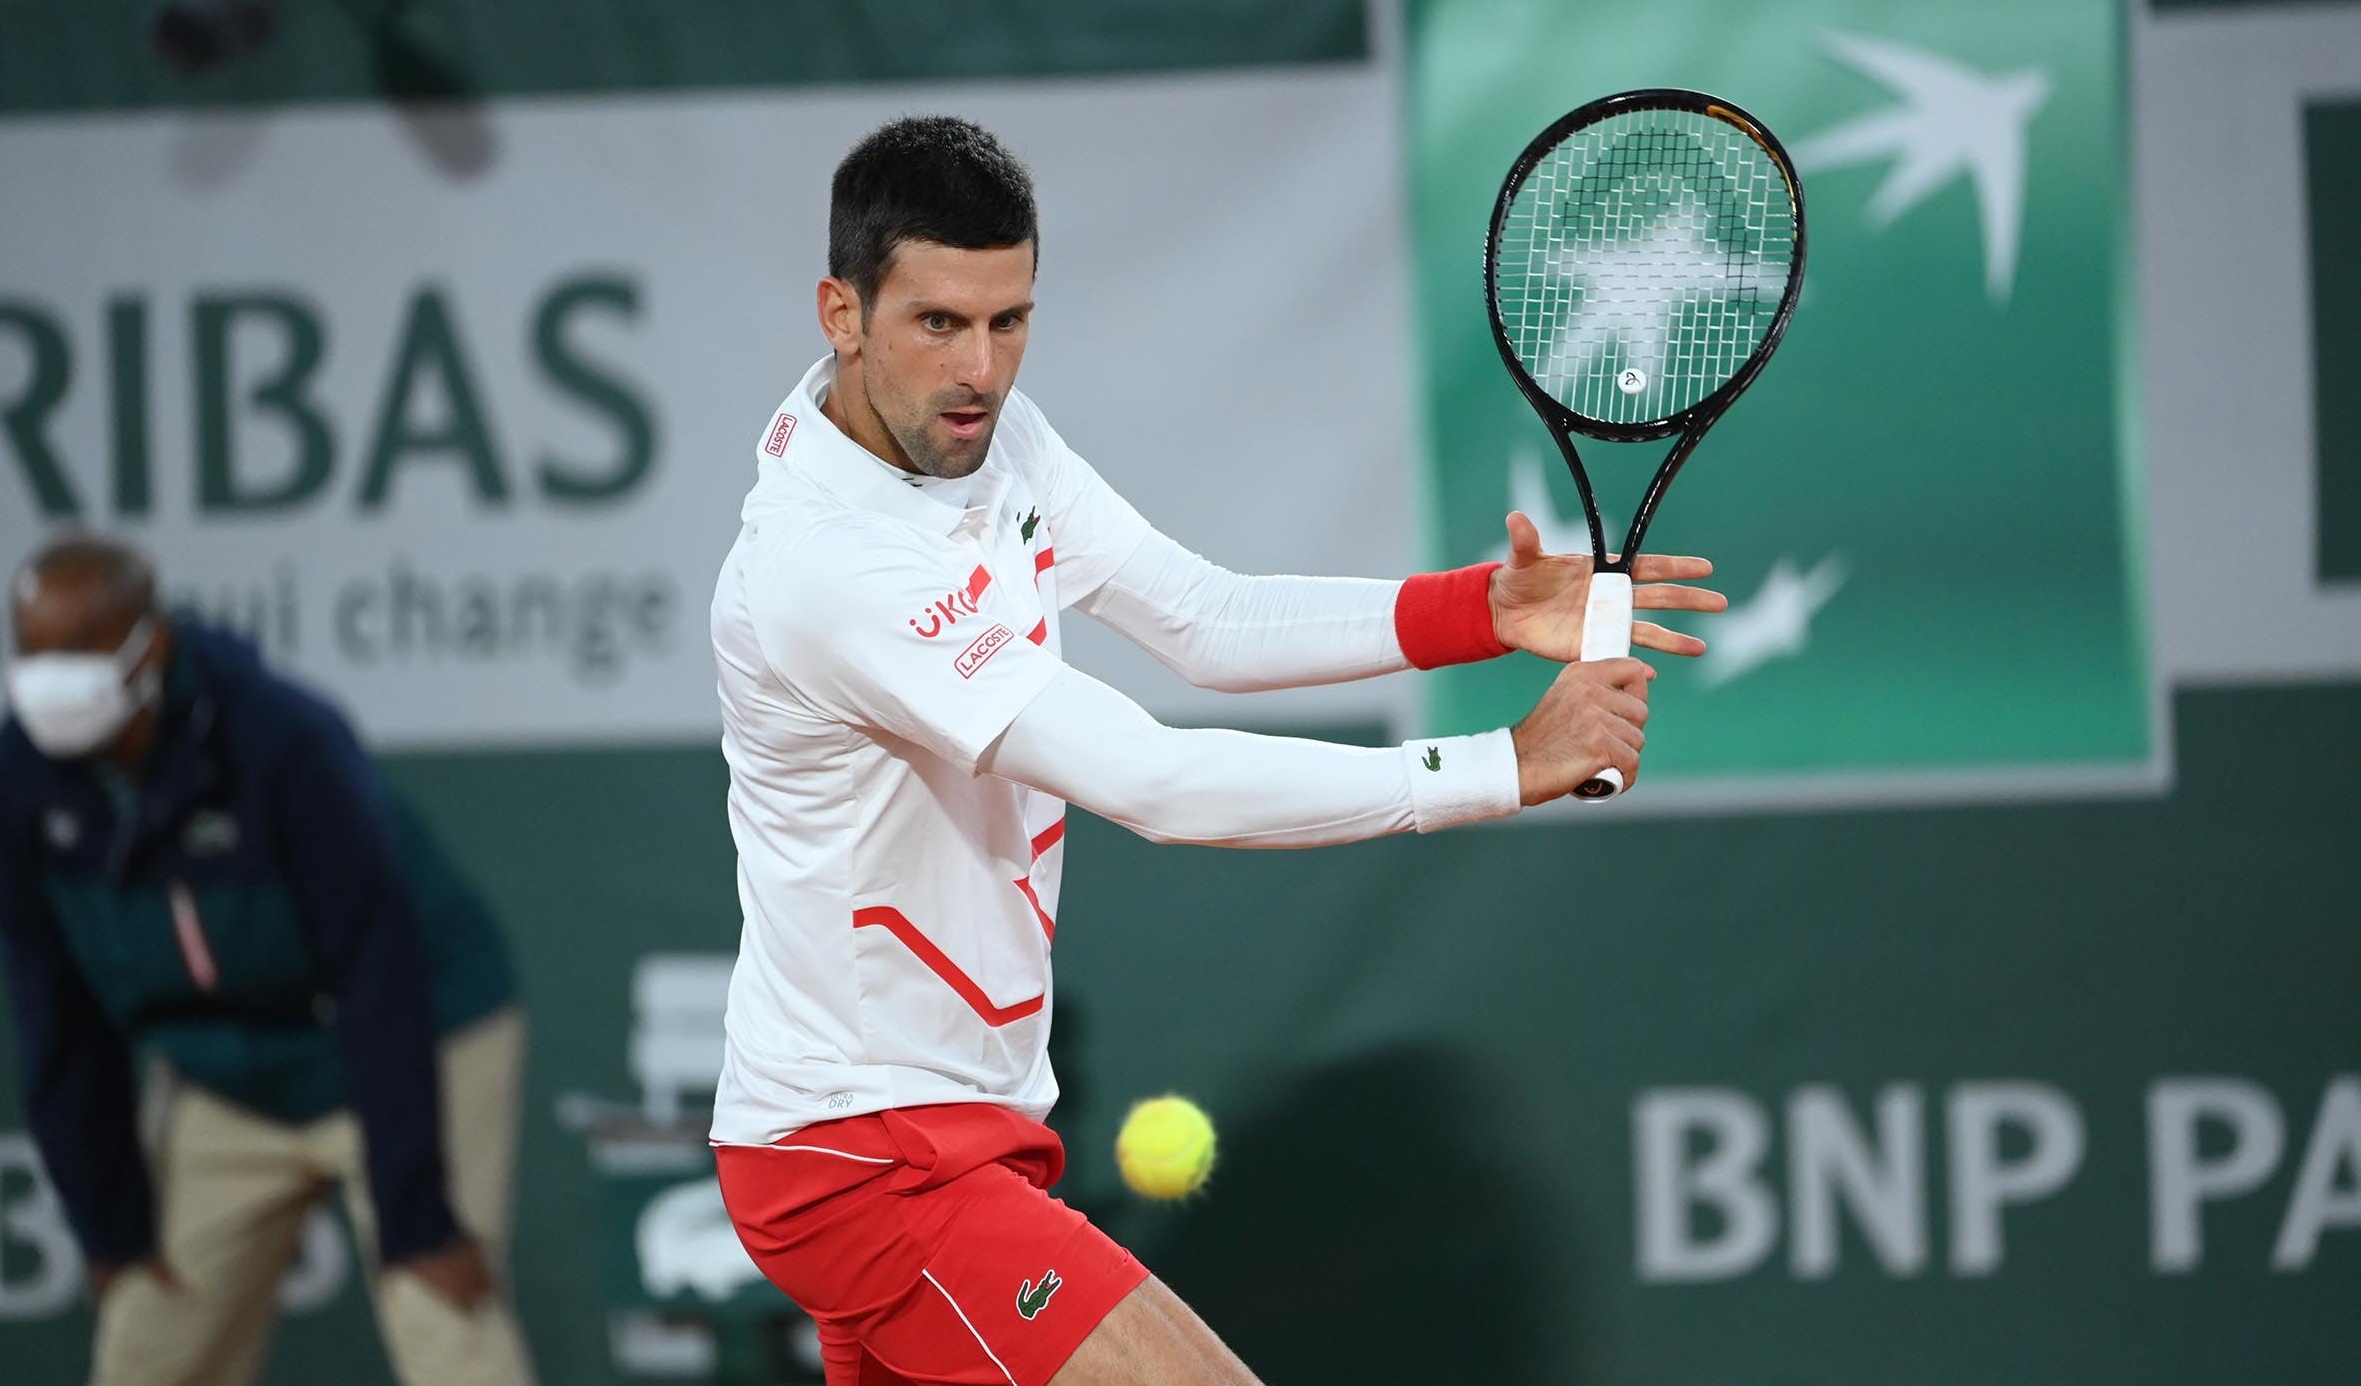 Novak Djokovic derrotó este lunes a Mikael Ymer por 6-0, 6-2 y 6-3. Su próximo rival será el lituano Ricardas Berankis. Foto: rolandgarros.com.